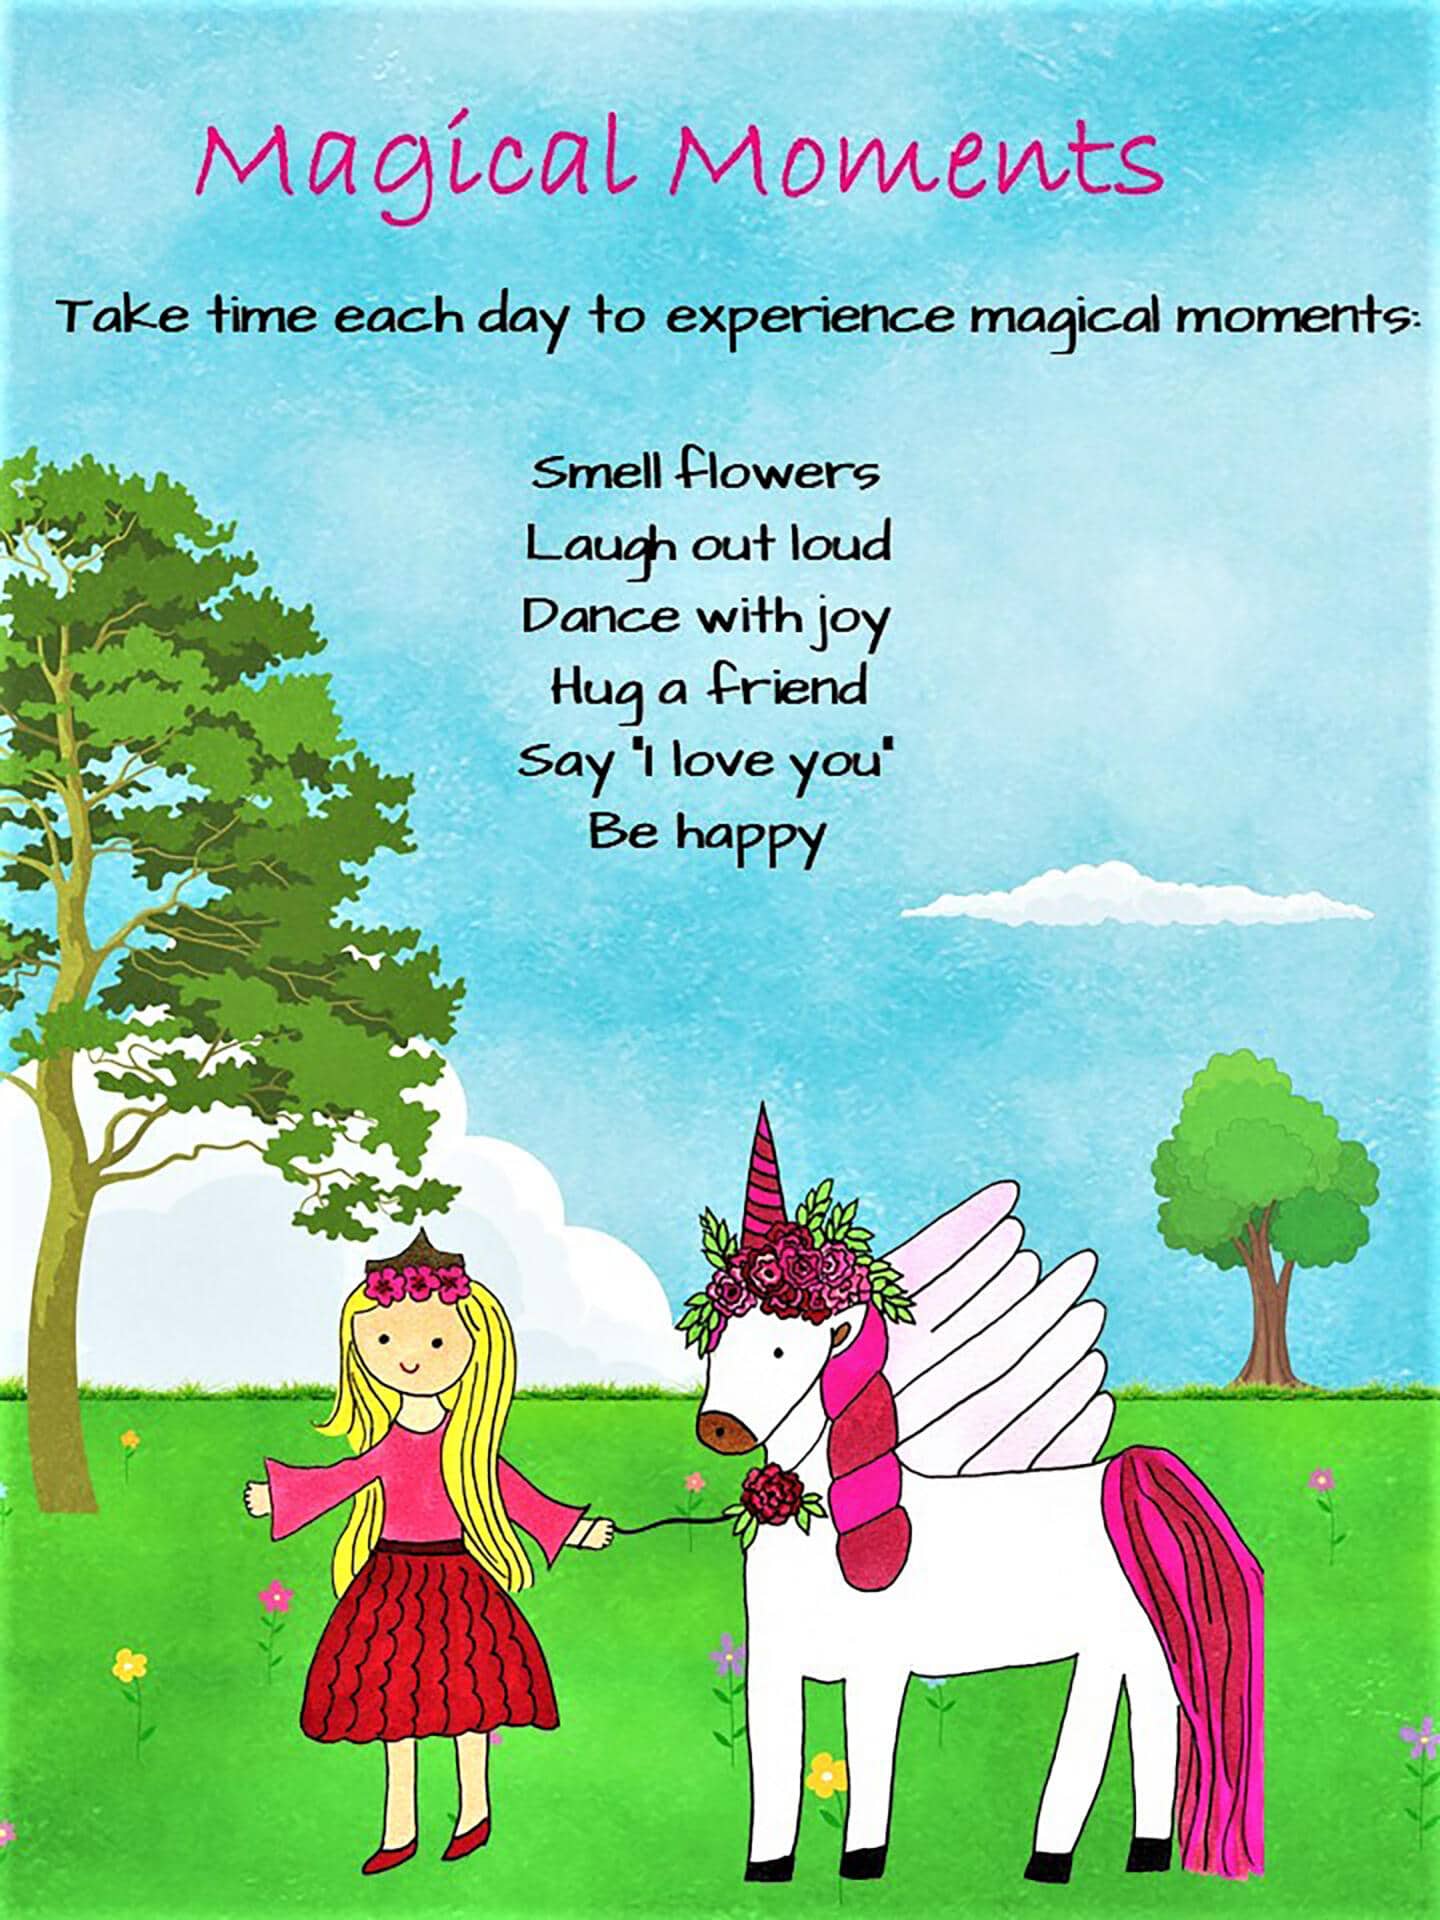 Princess & Unicorn Party eCard